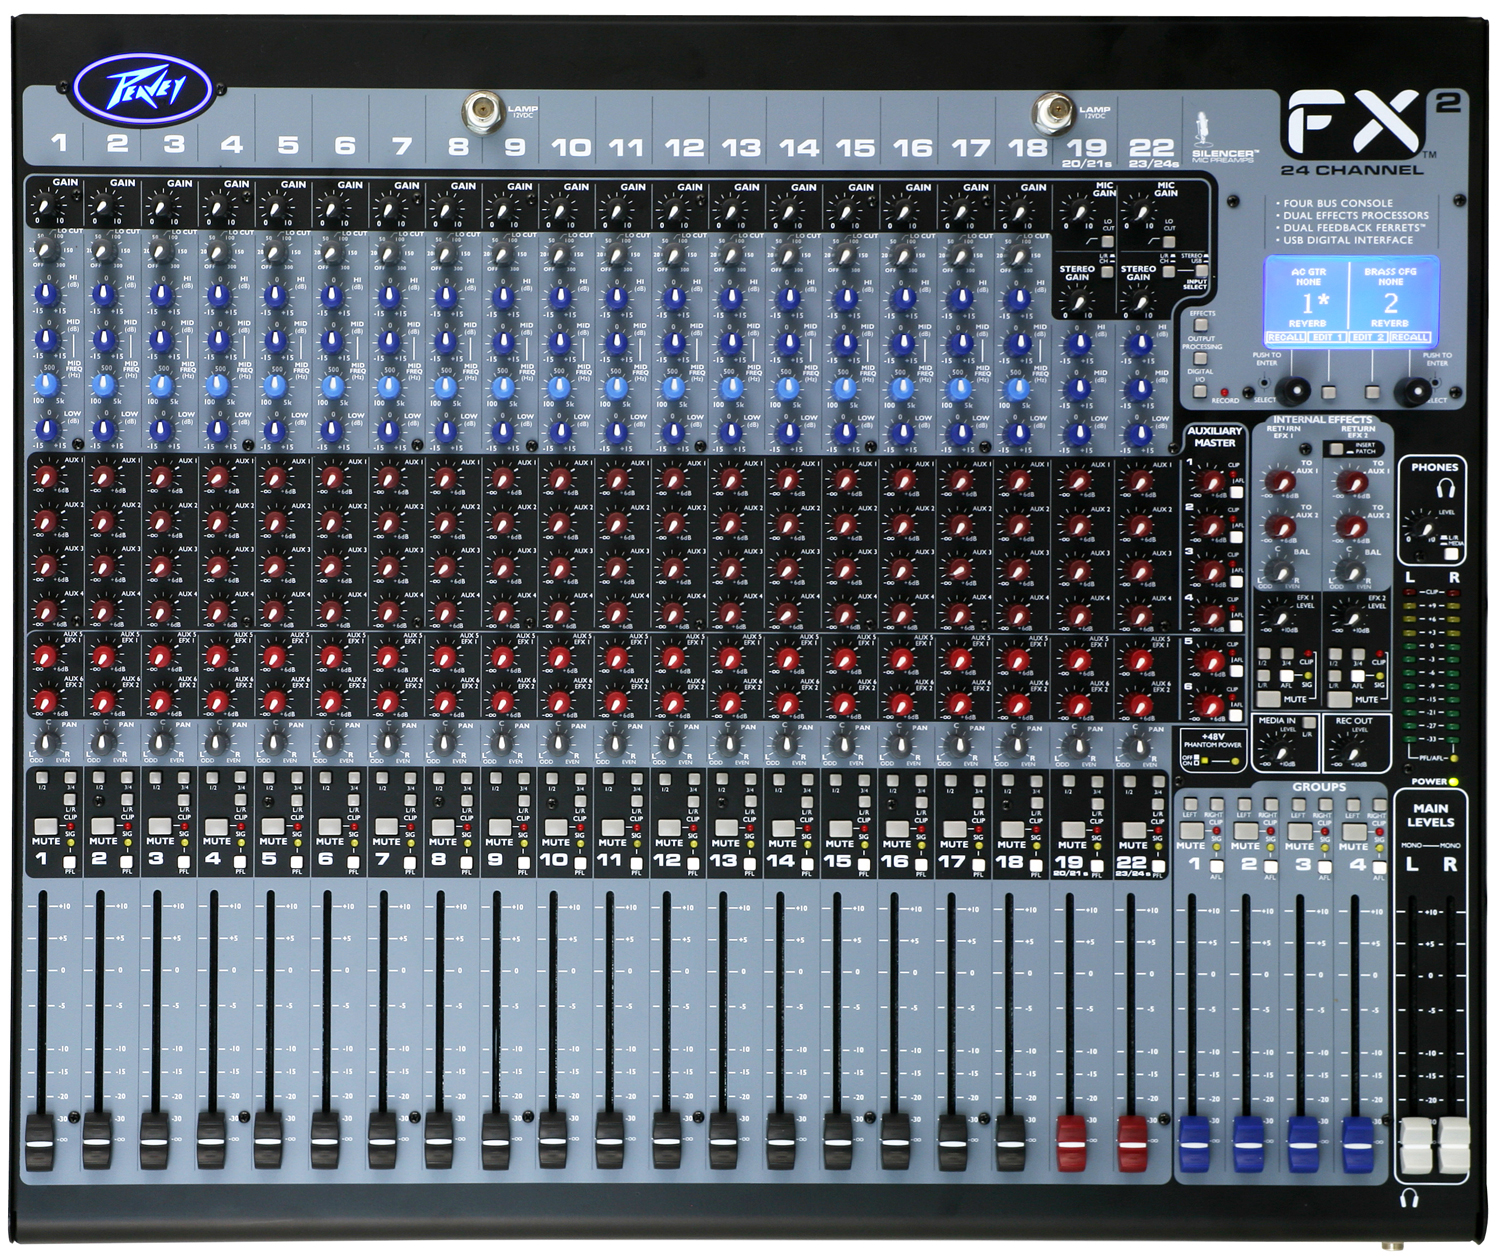 Peavey 32fx mixer manual